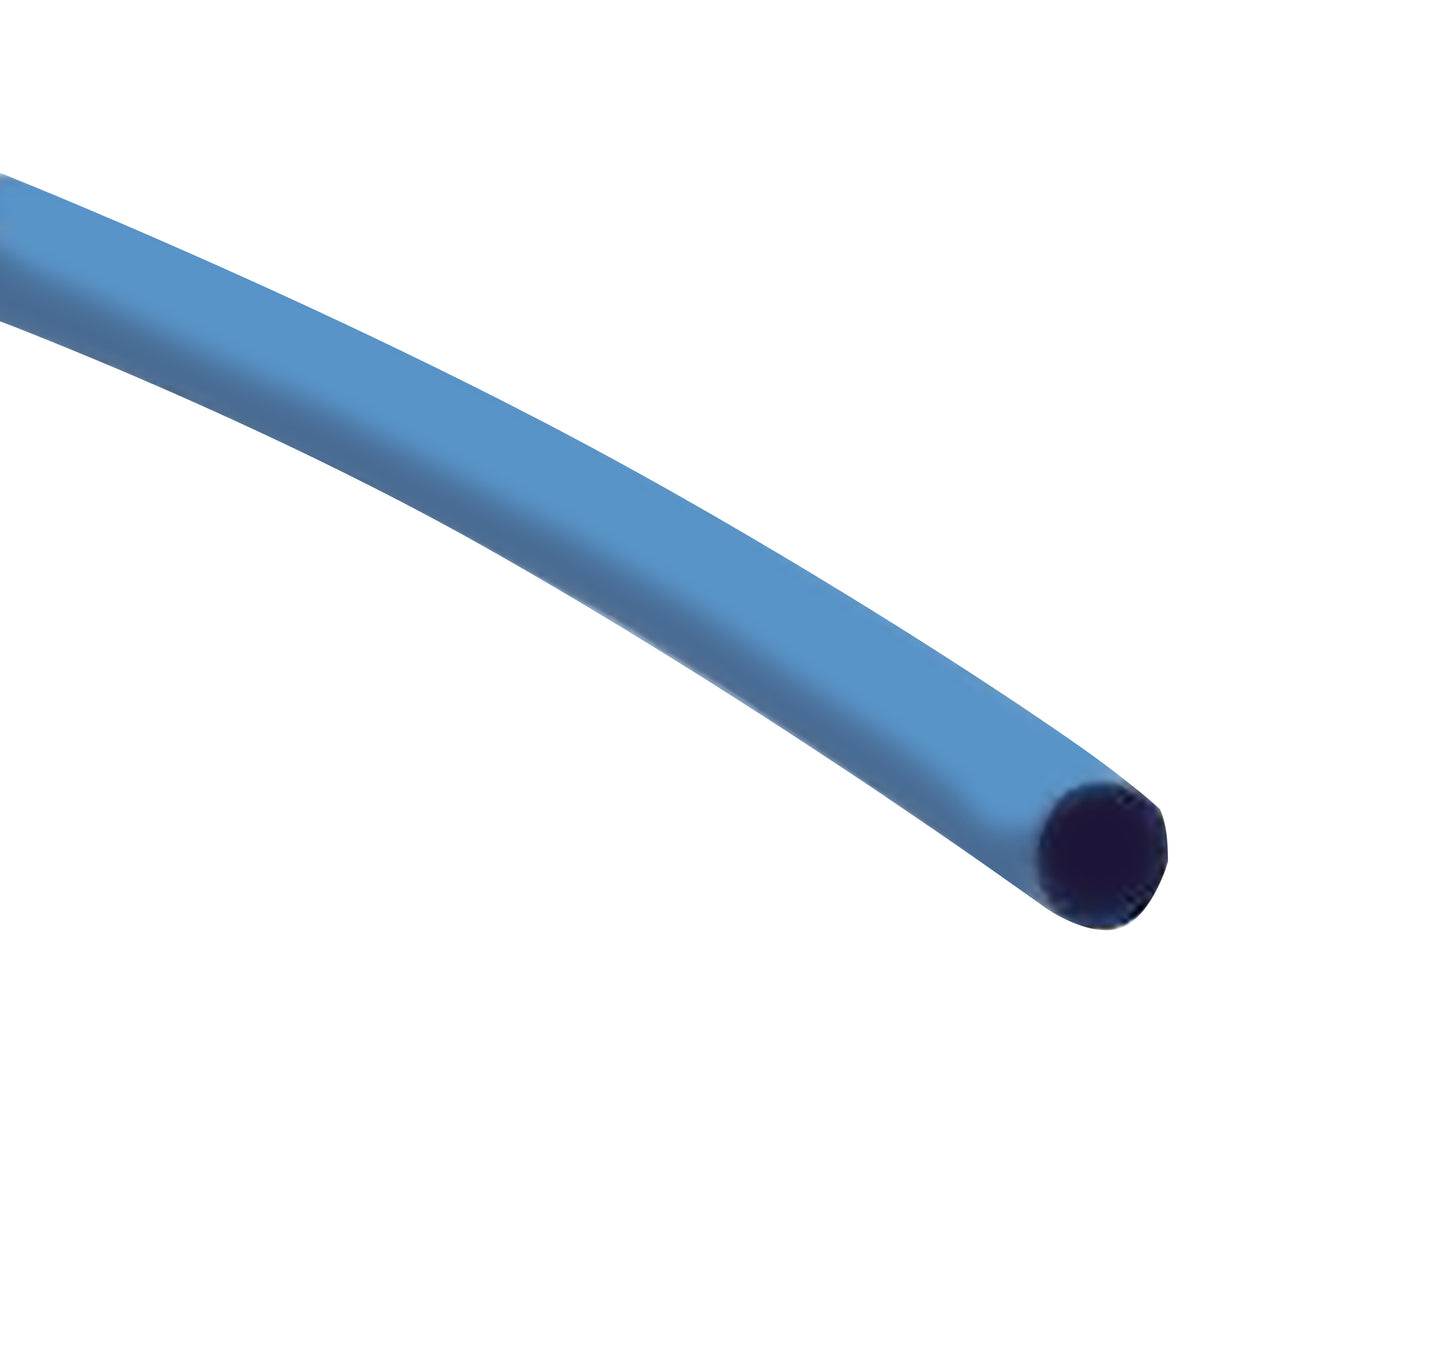 Flexible Thin Single Wall Non-Adhesive Heat Shrink Tubing 2:1 Blue 3/16" ID - 25' Ft Spool